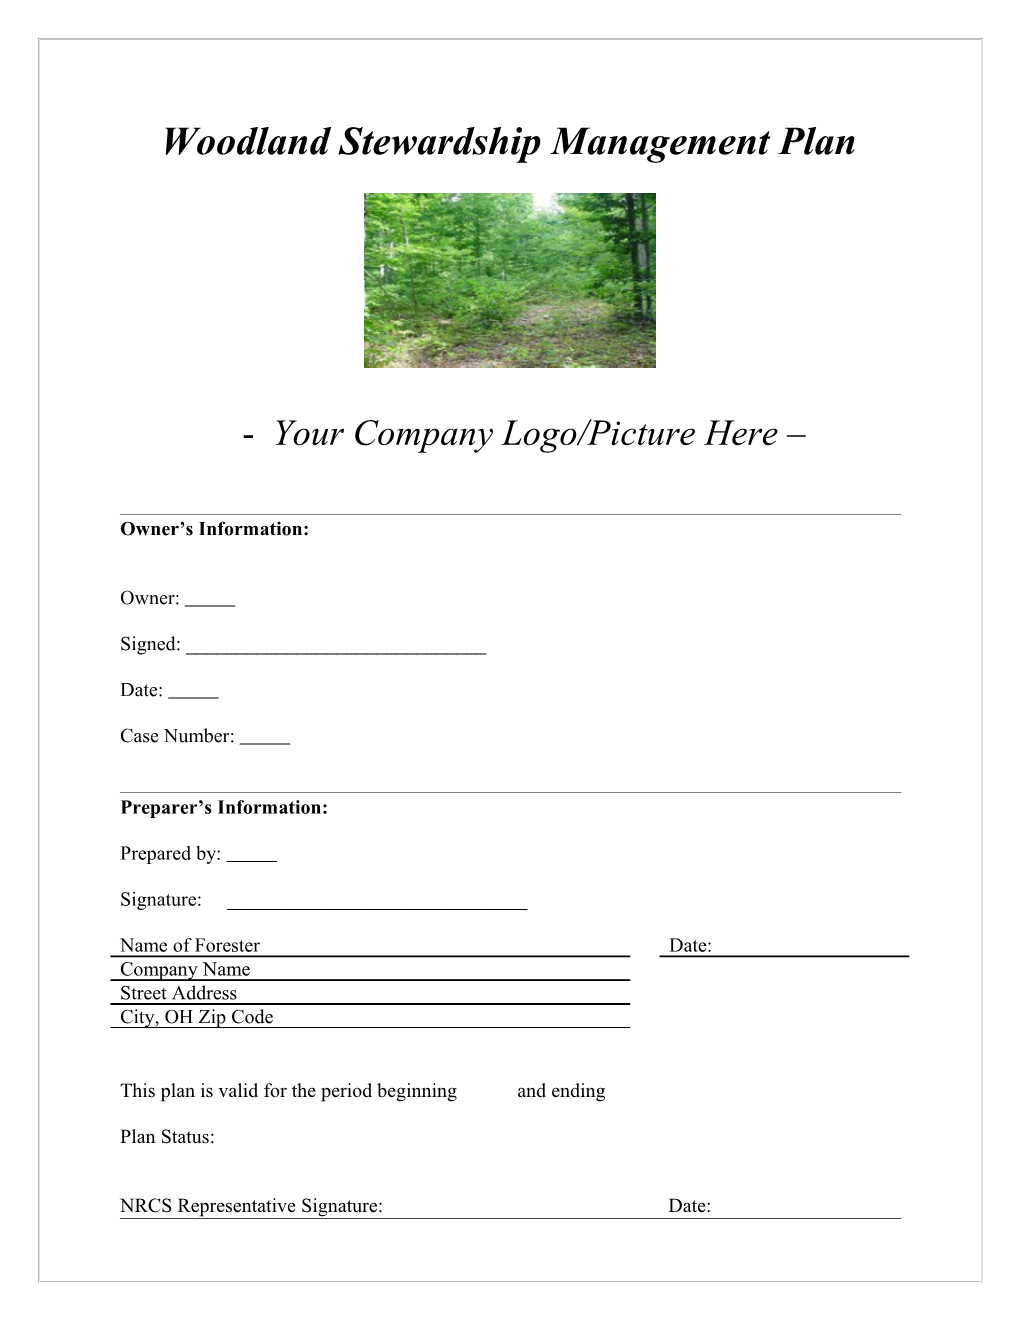 Woodland Stewardship Management Plan